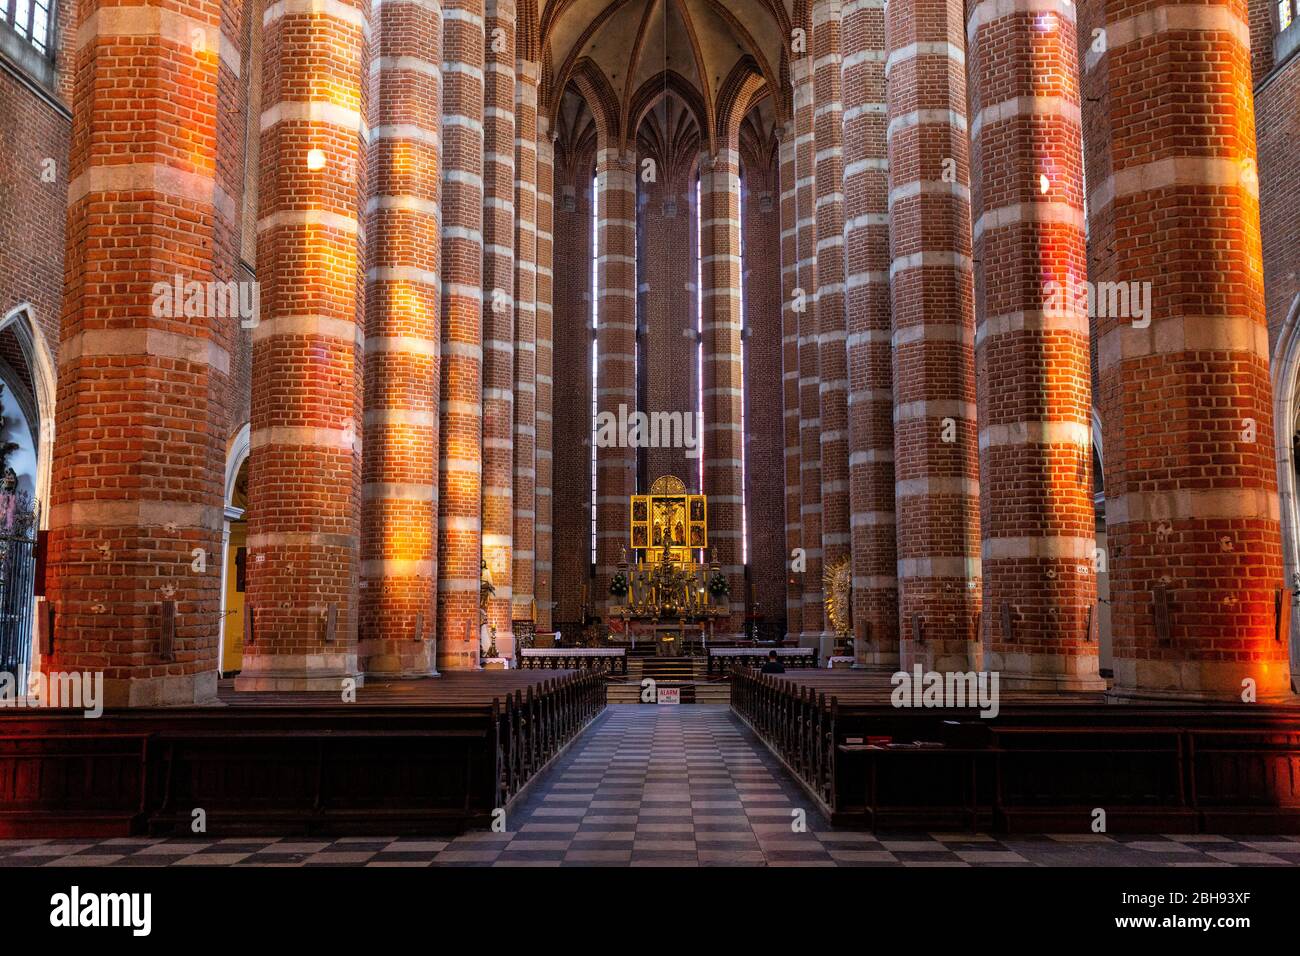 Europe, Poland, Opole Voivodeship, Nysa - Basilica of St James and St Agnes Stock Photo